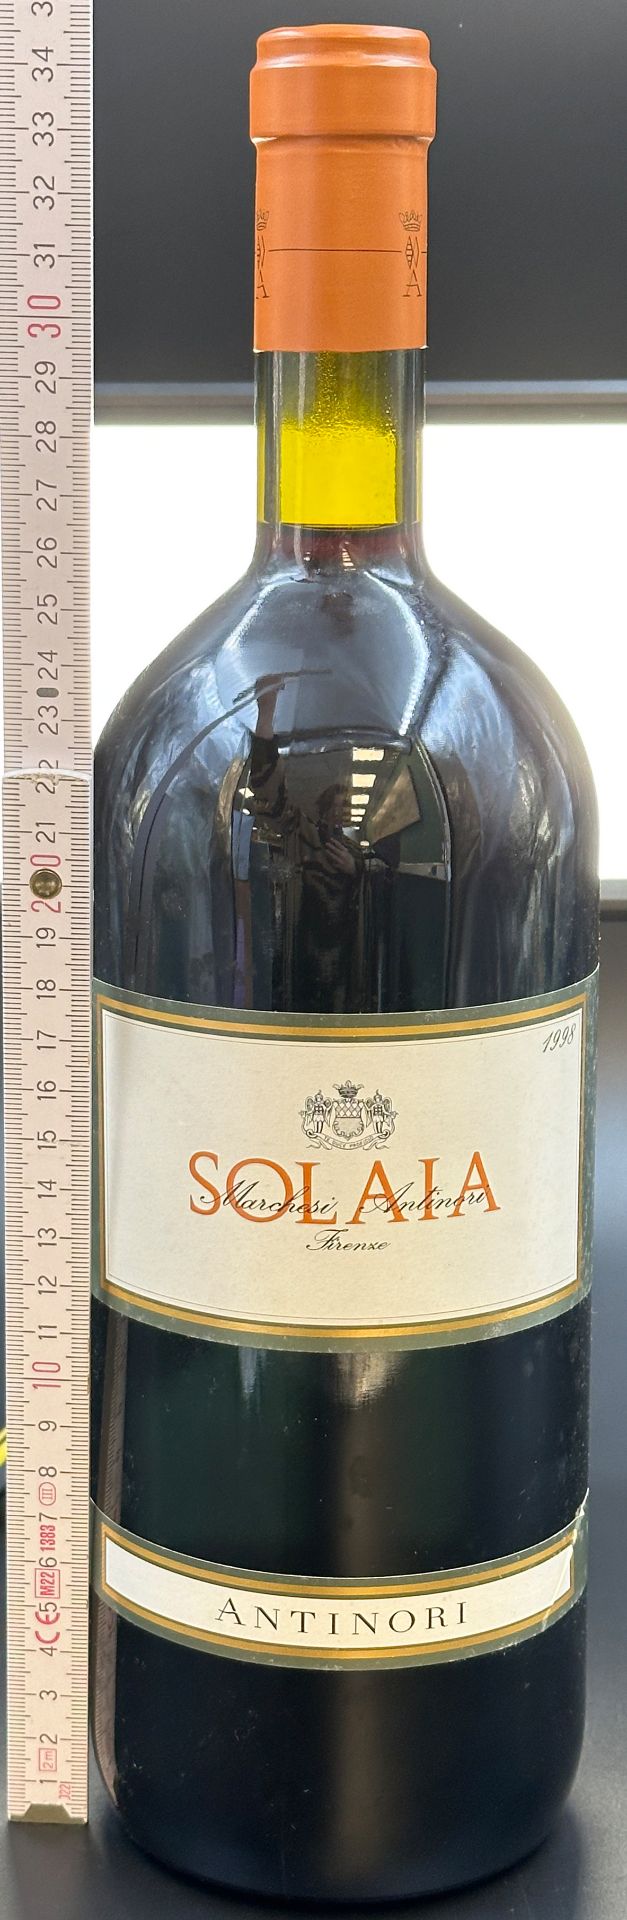 SOLAIA. Marchesi Antinori. 1 magnum bottle of red wine. 1998. - Image 9 of 11